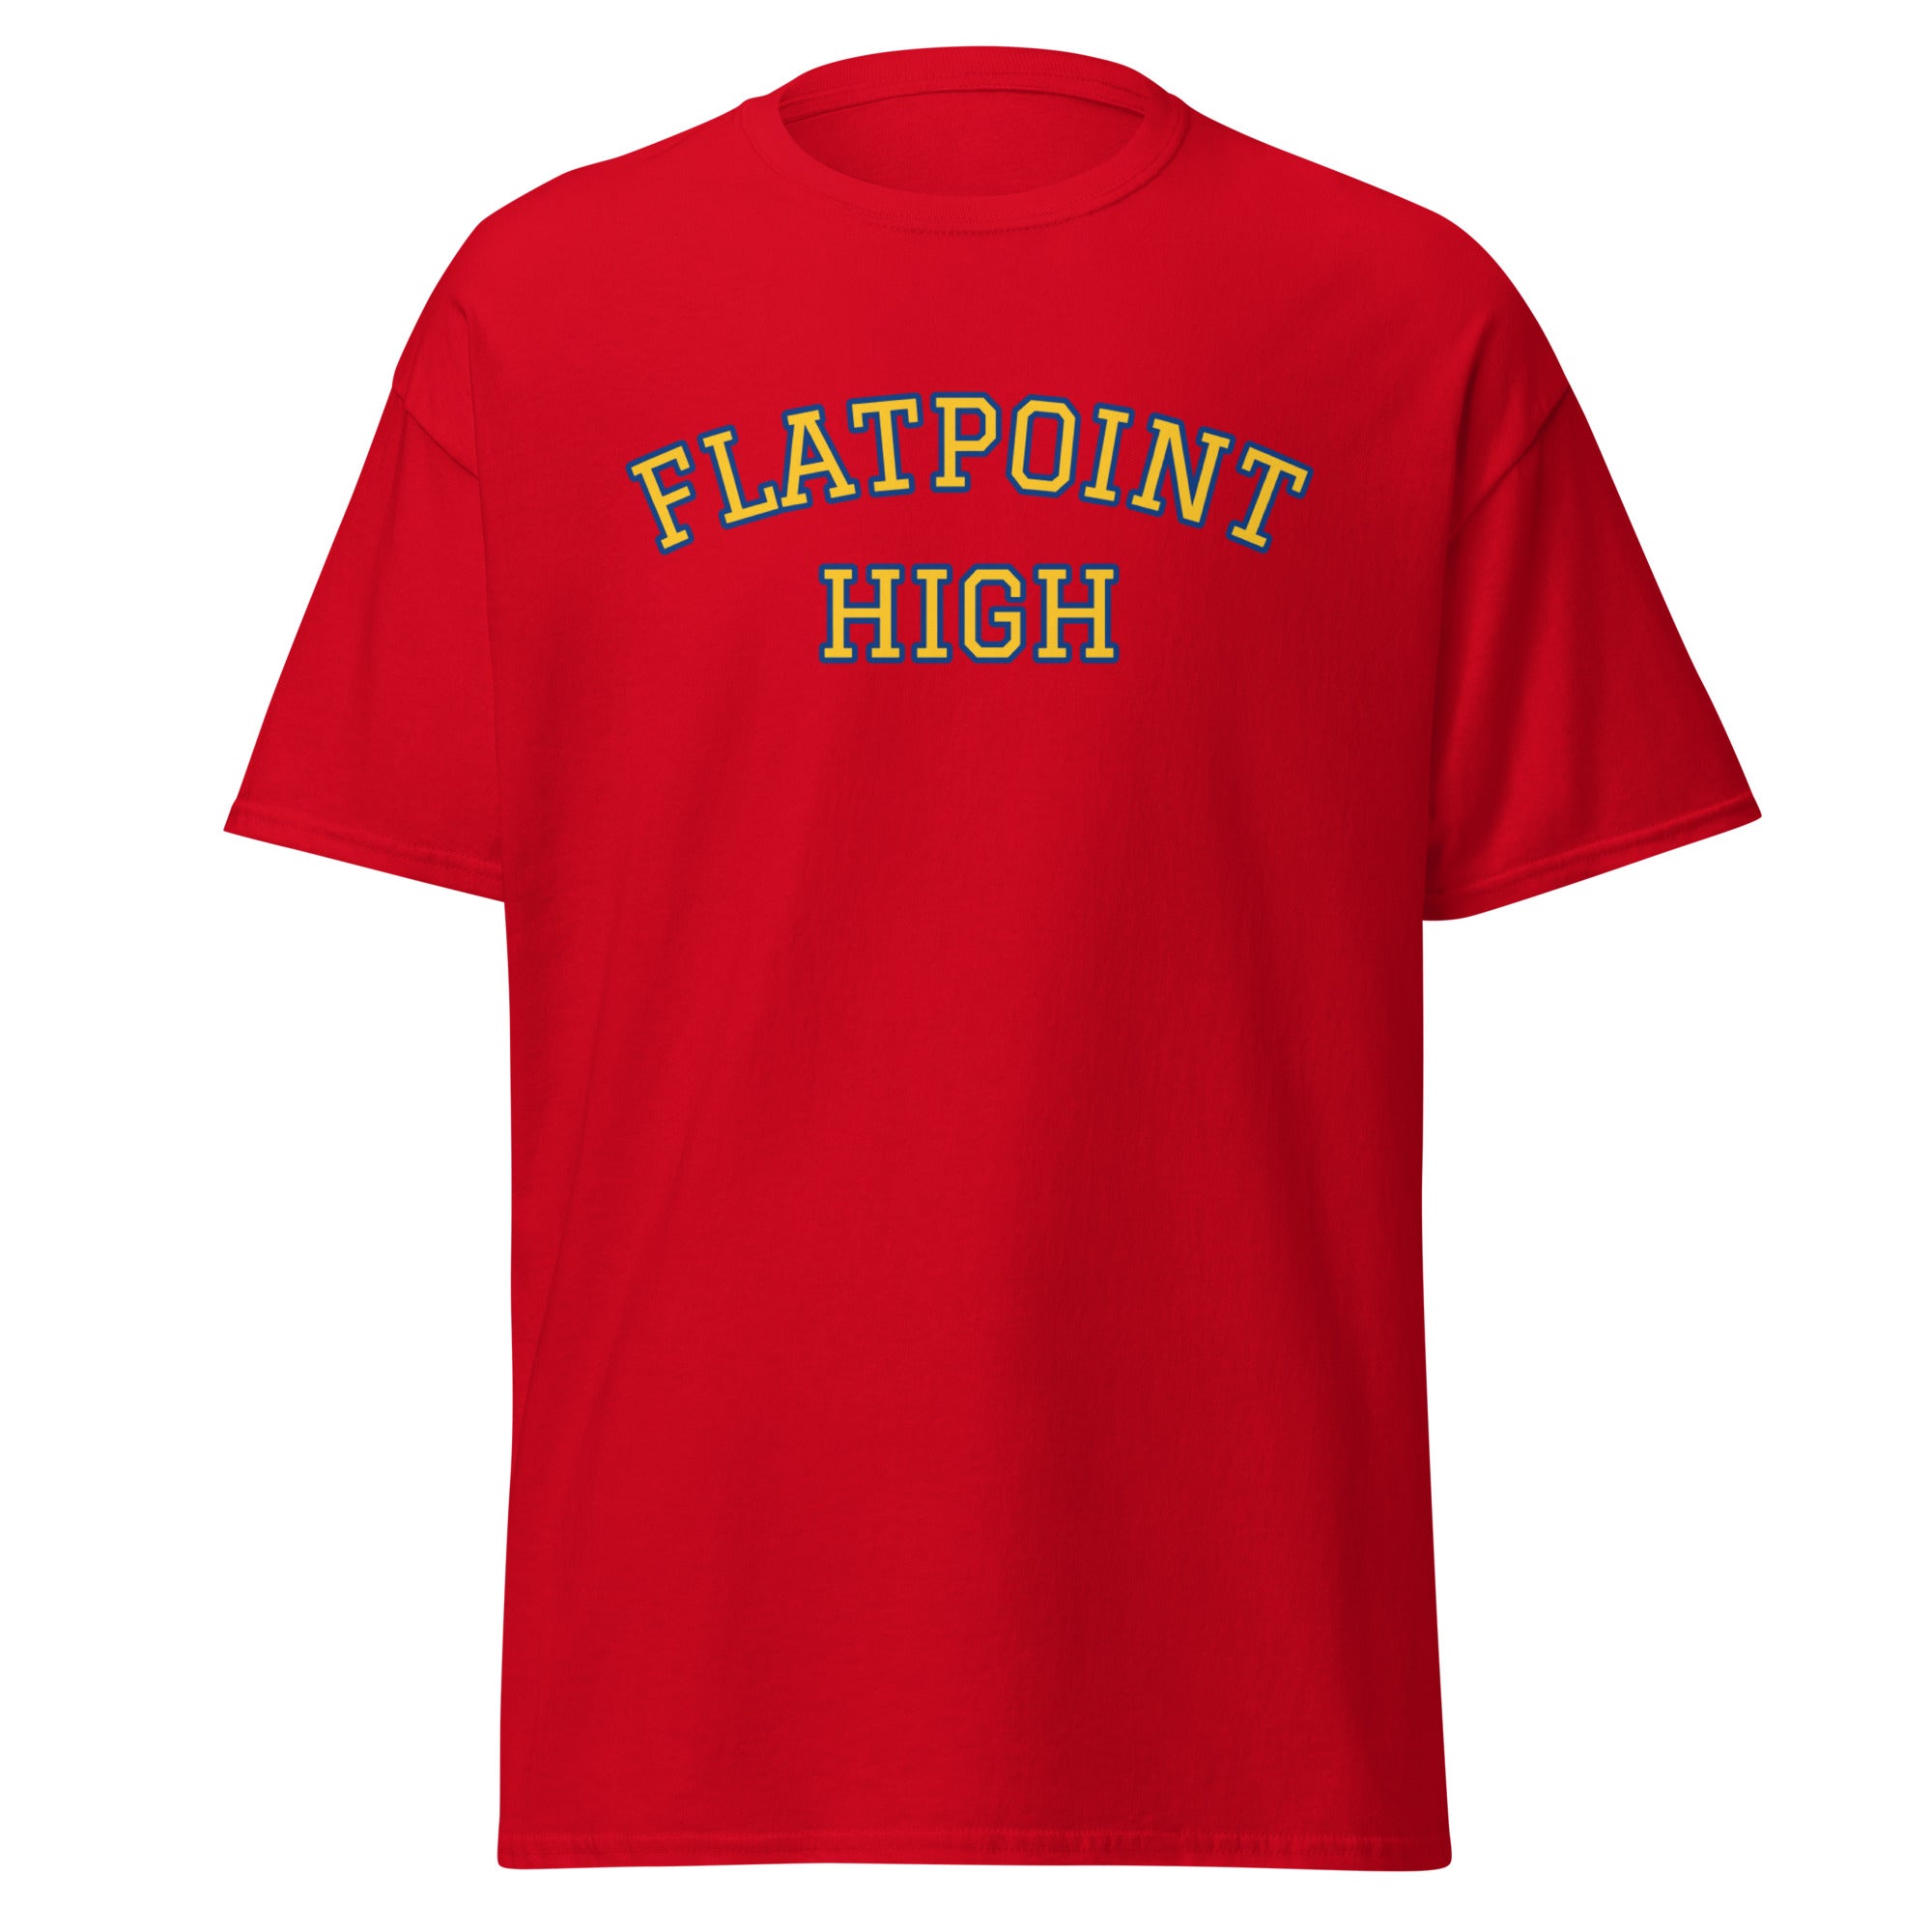 Flatpoint High Classic Tee